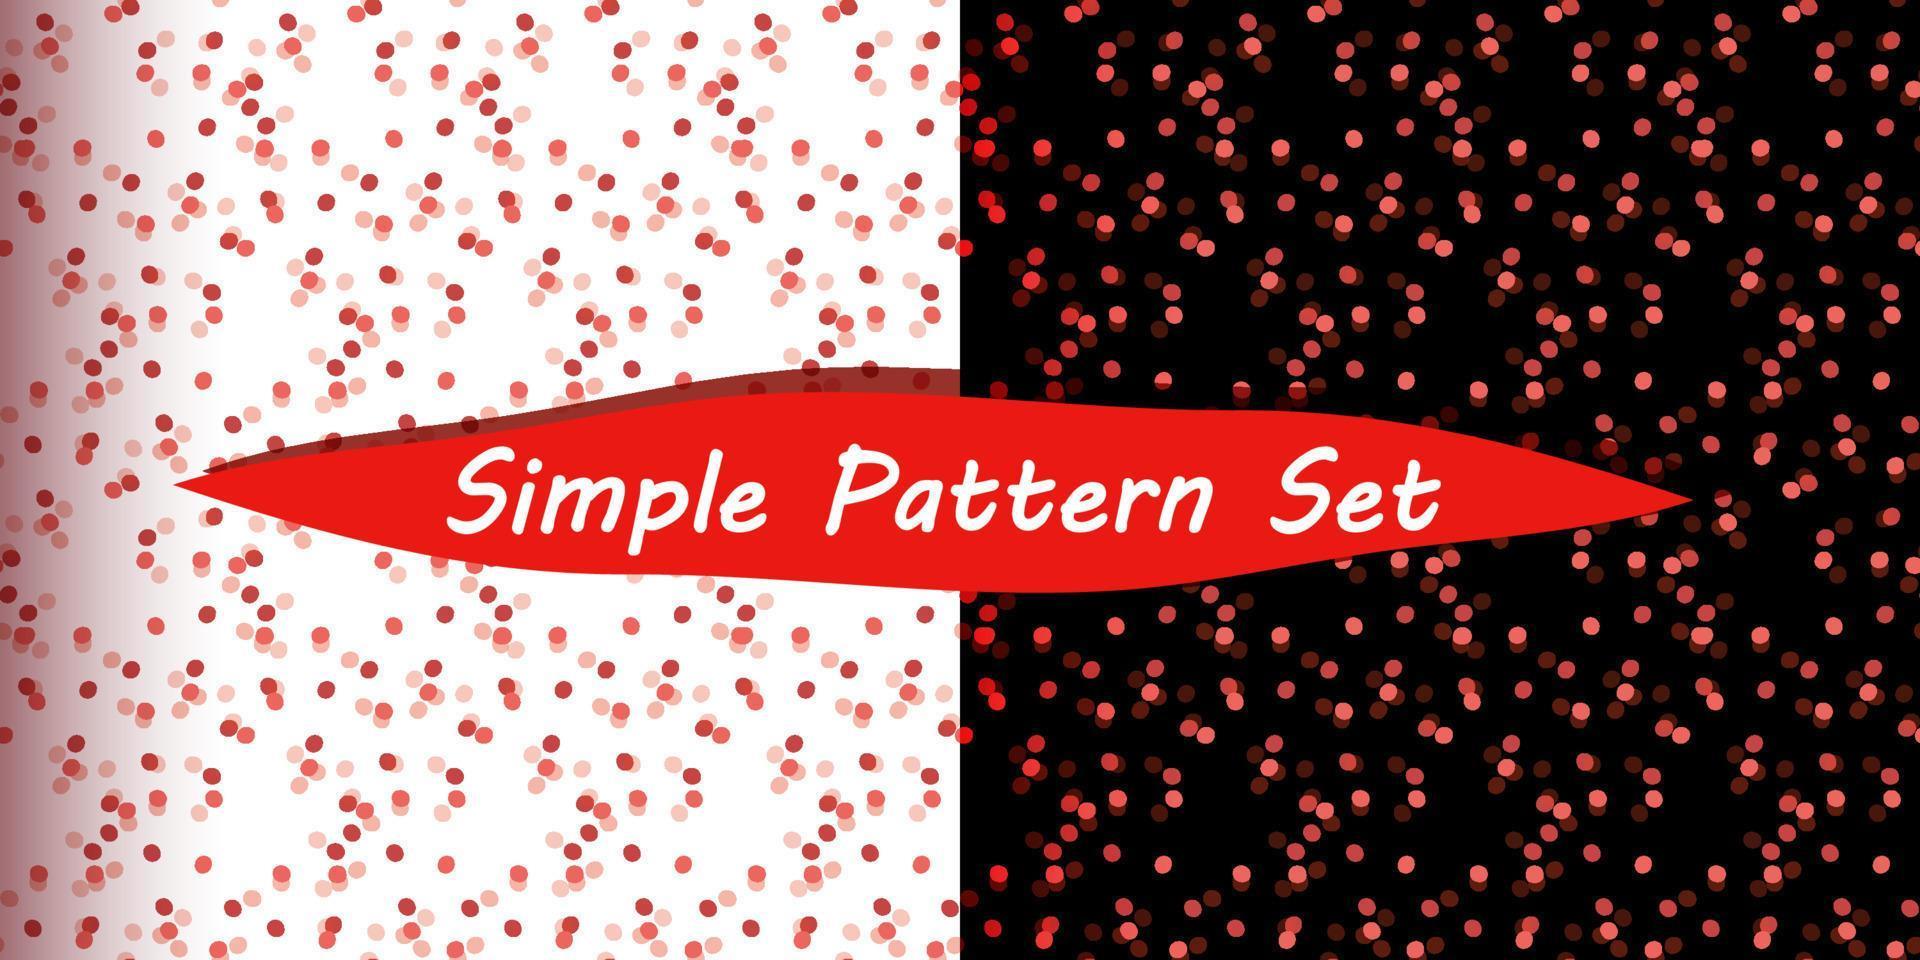 Abstract polka dot seamless vector pattern set red and black